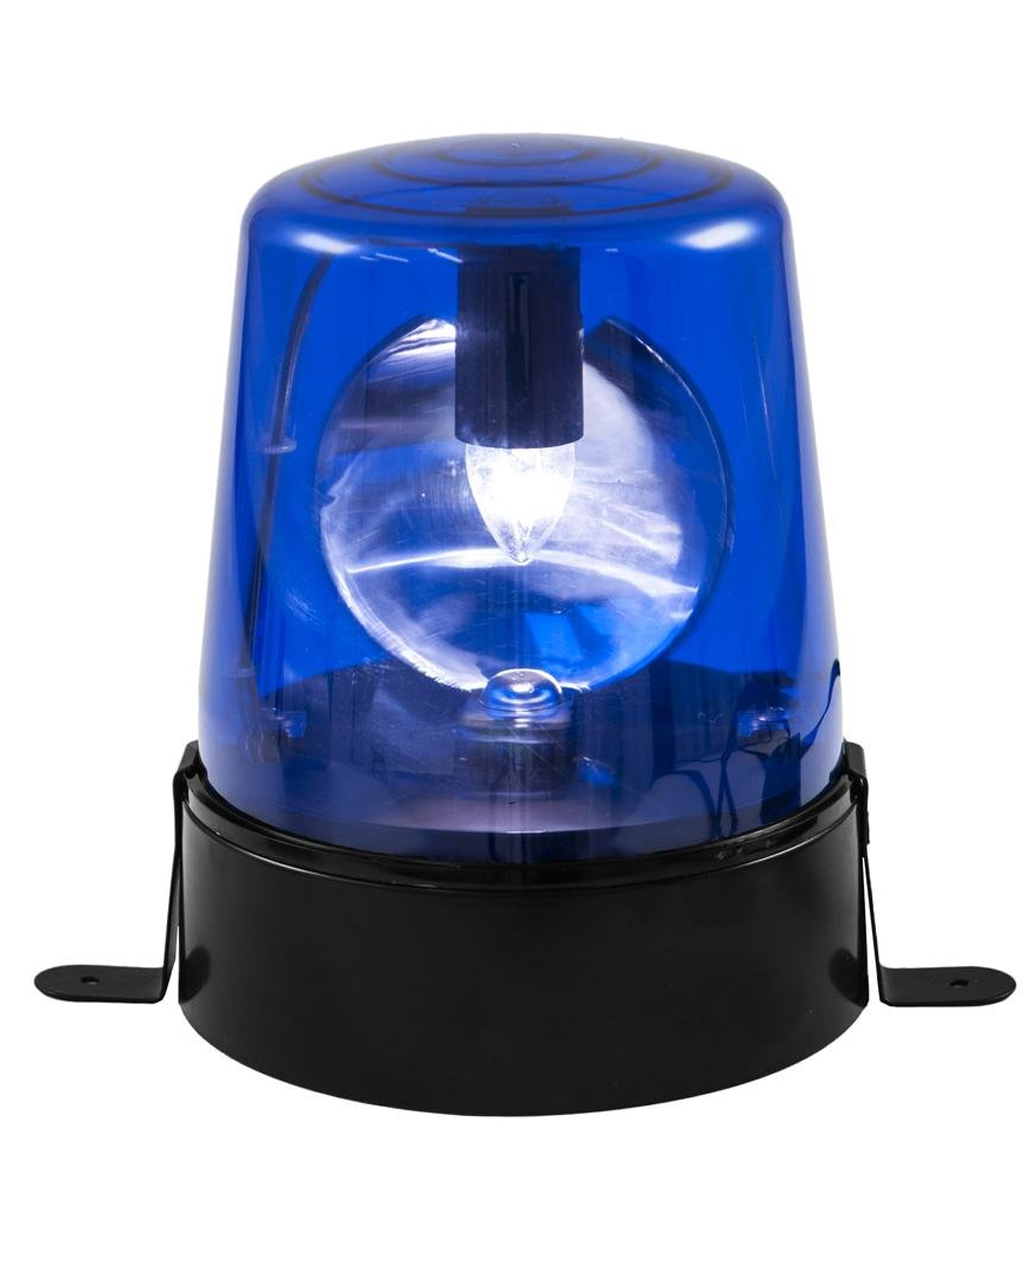 Polizeilicht COL-1221 blau 12V/21W - eurolite